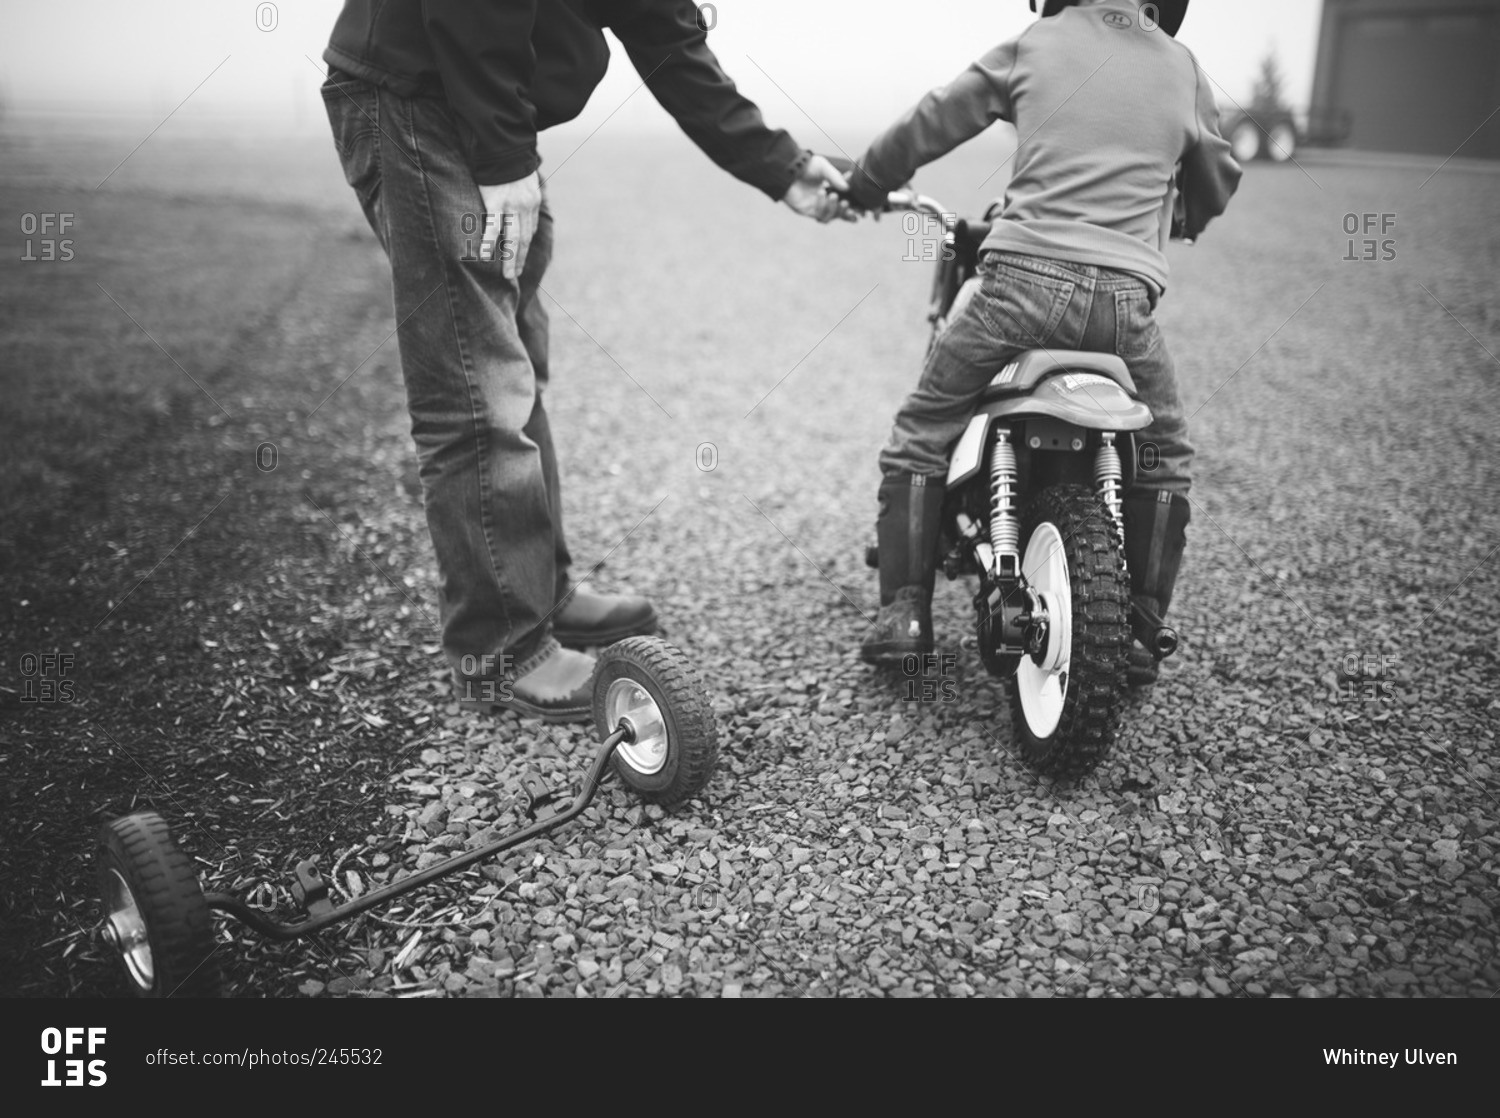 Man helping boy on his youth sized dirt bike